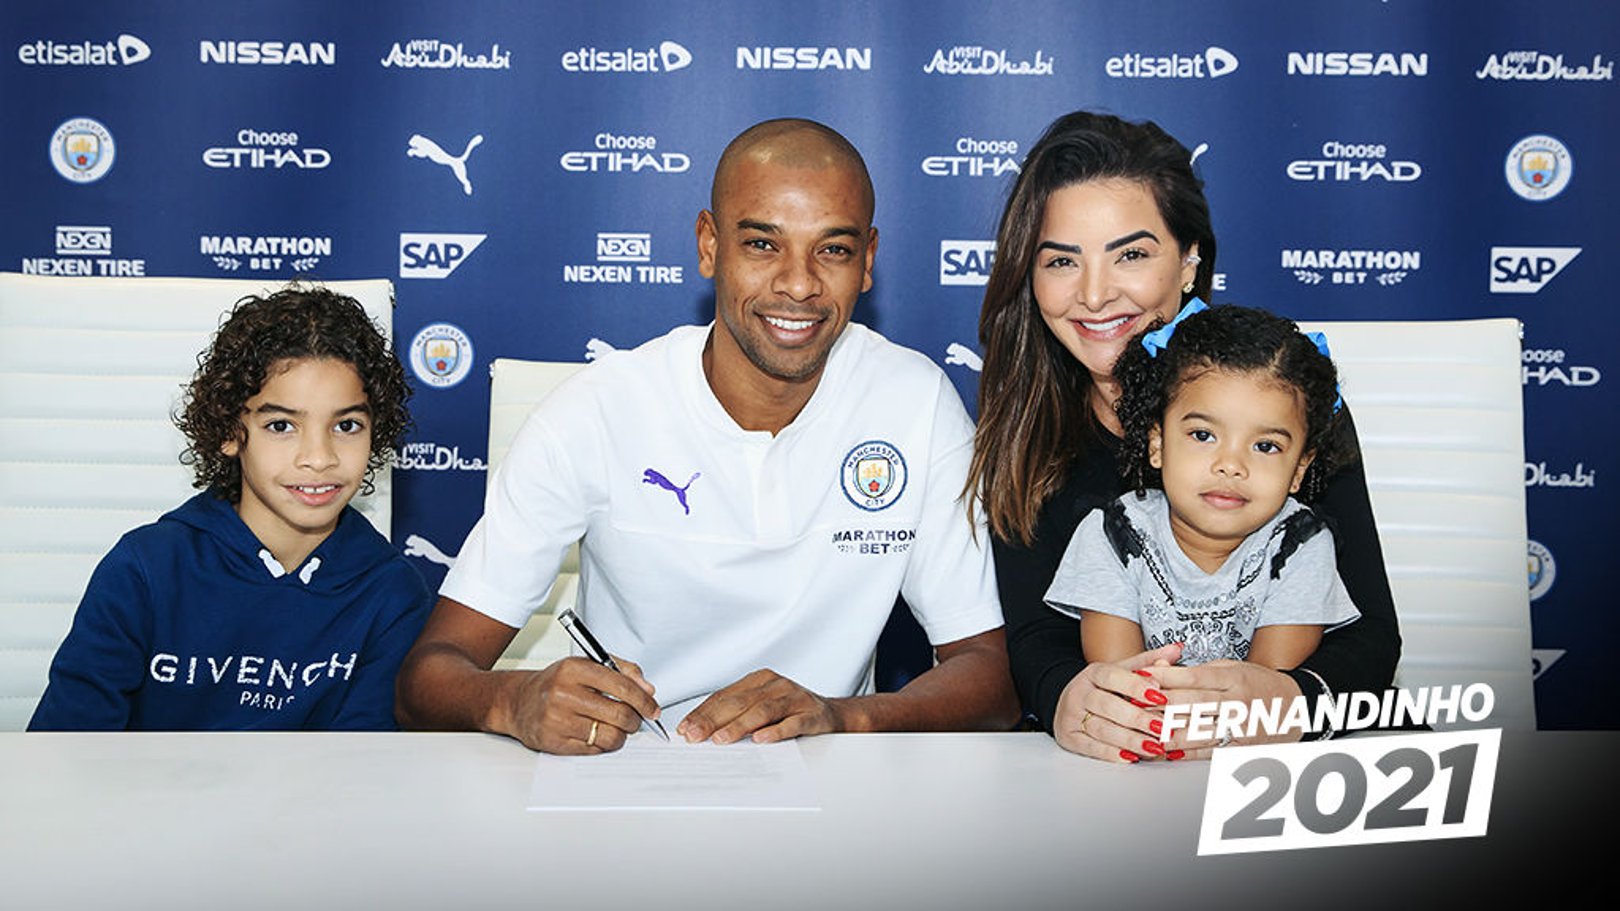 Fernandinho signs contract extension 